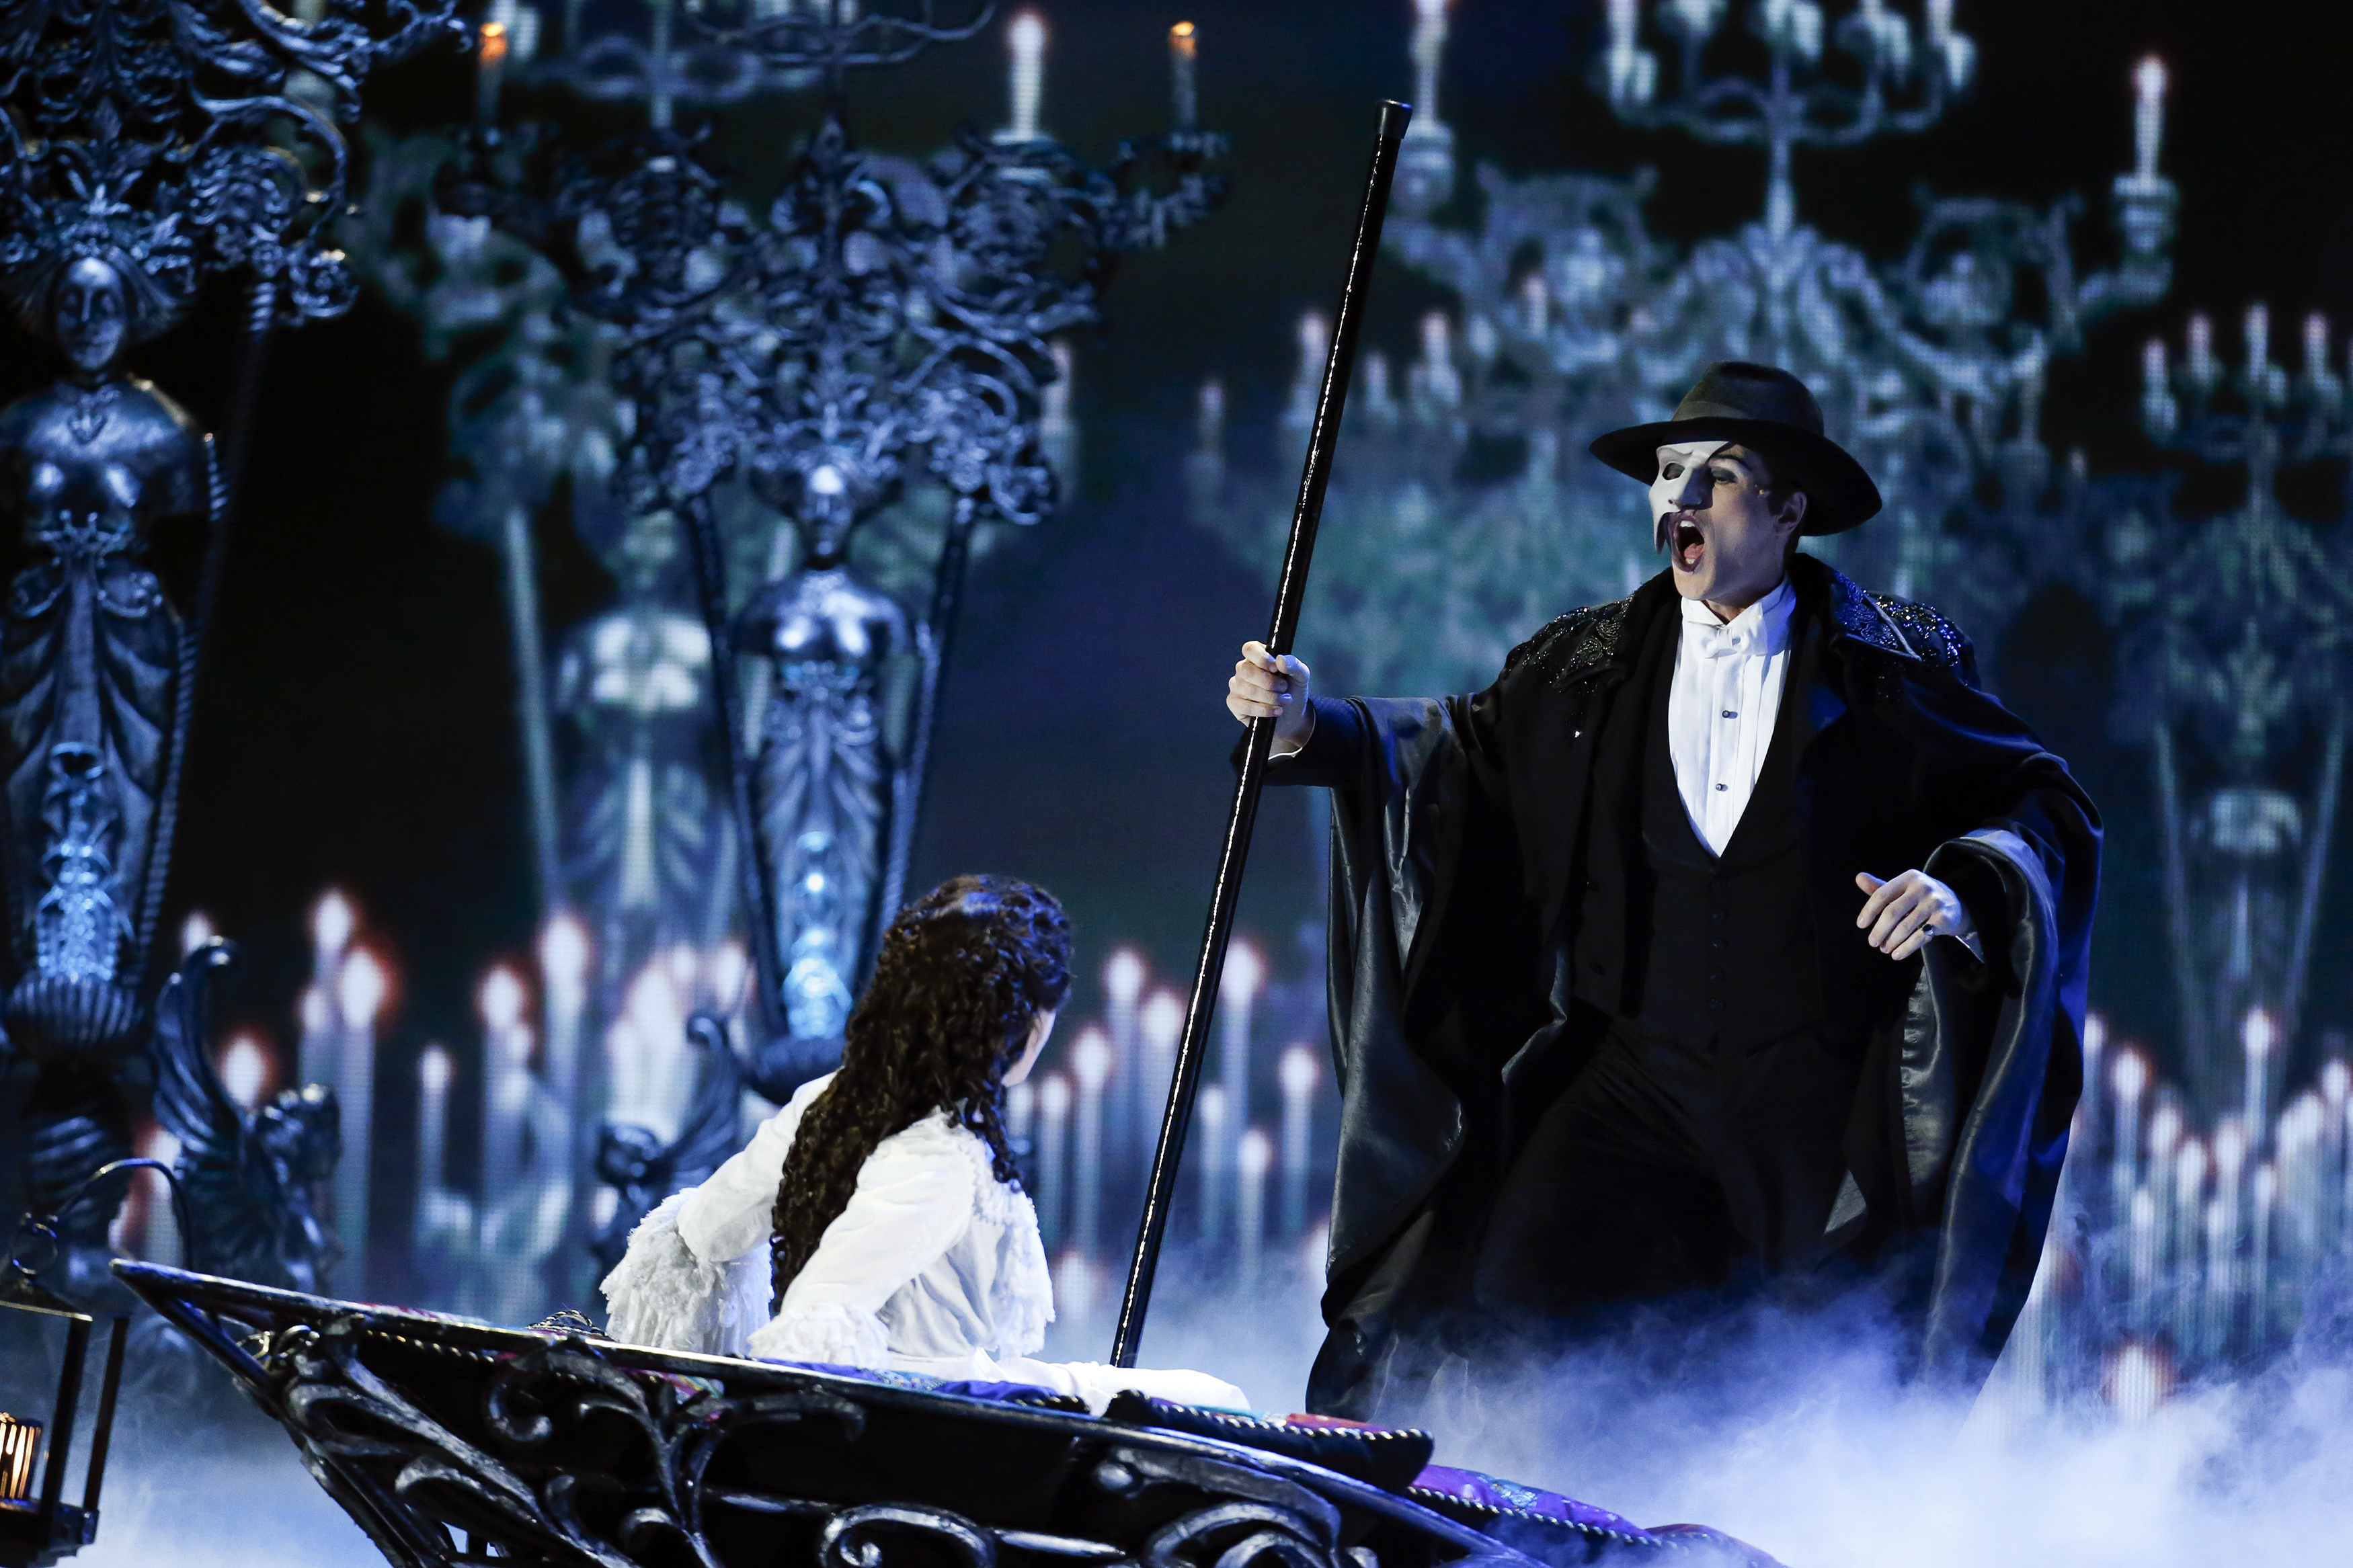 2) The Phantom of the Opera